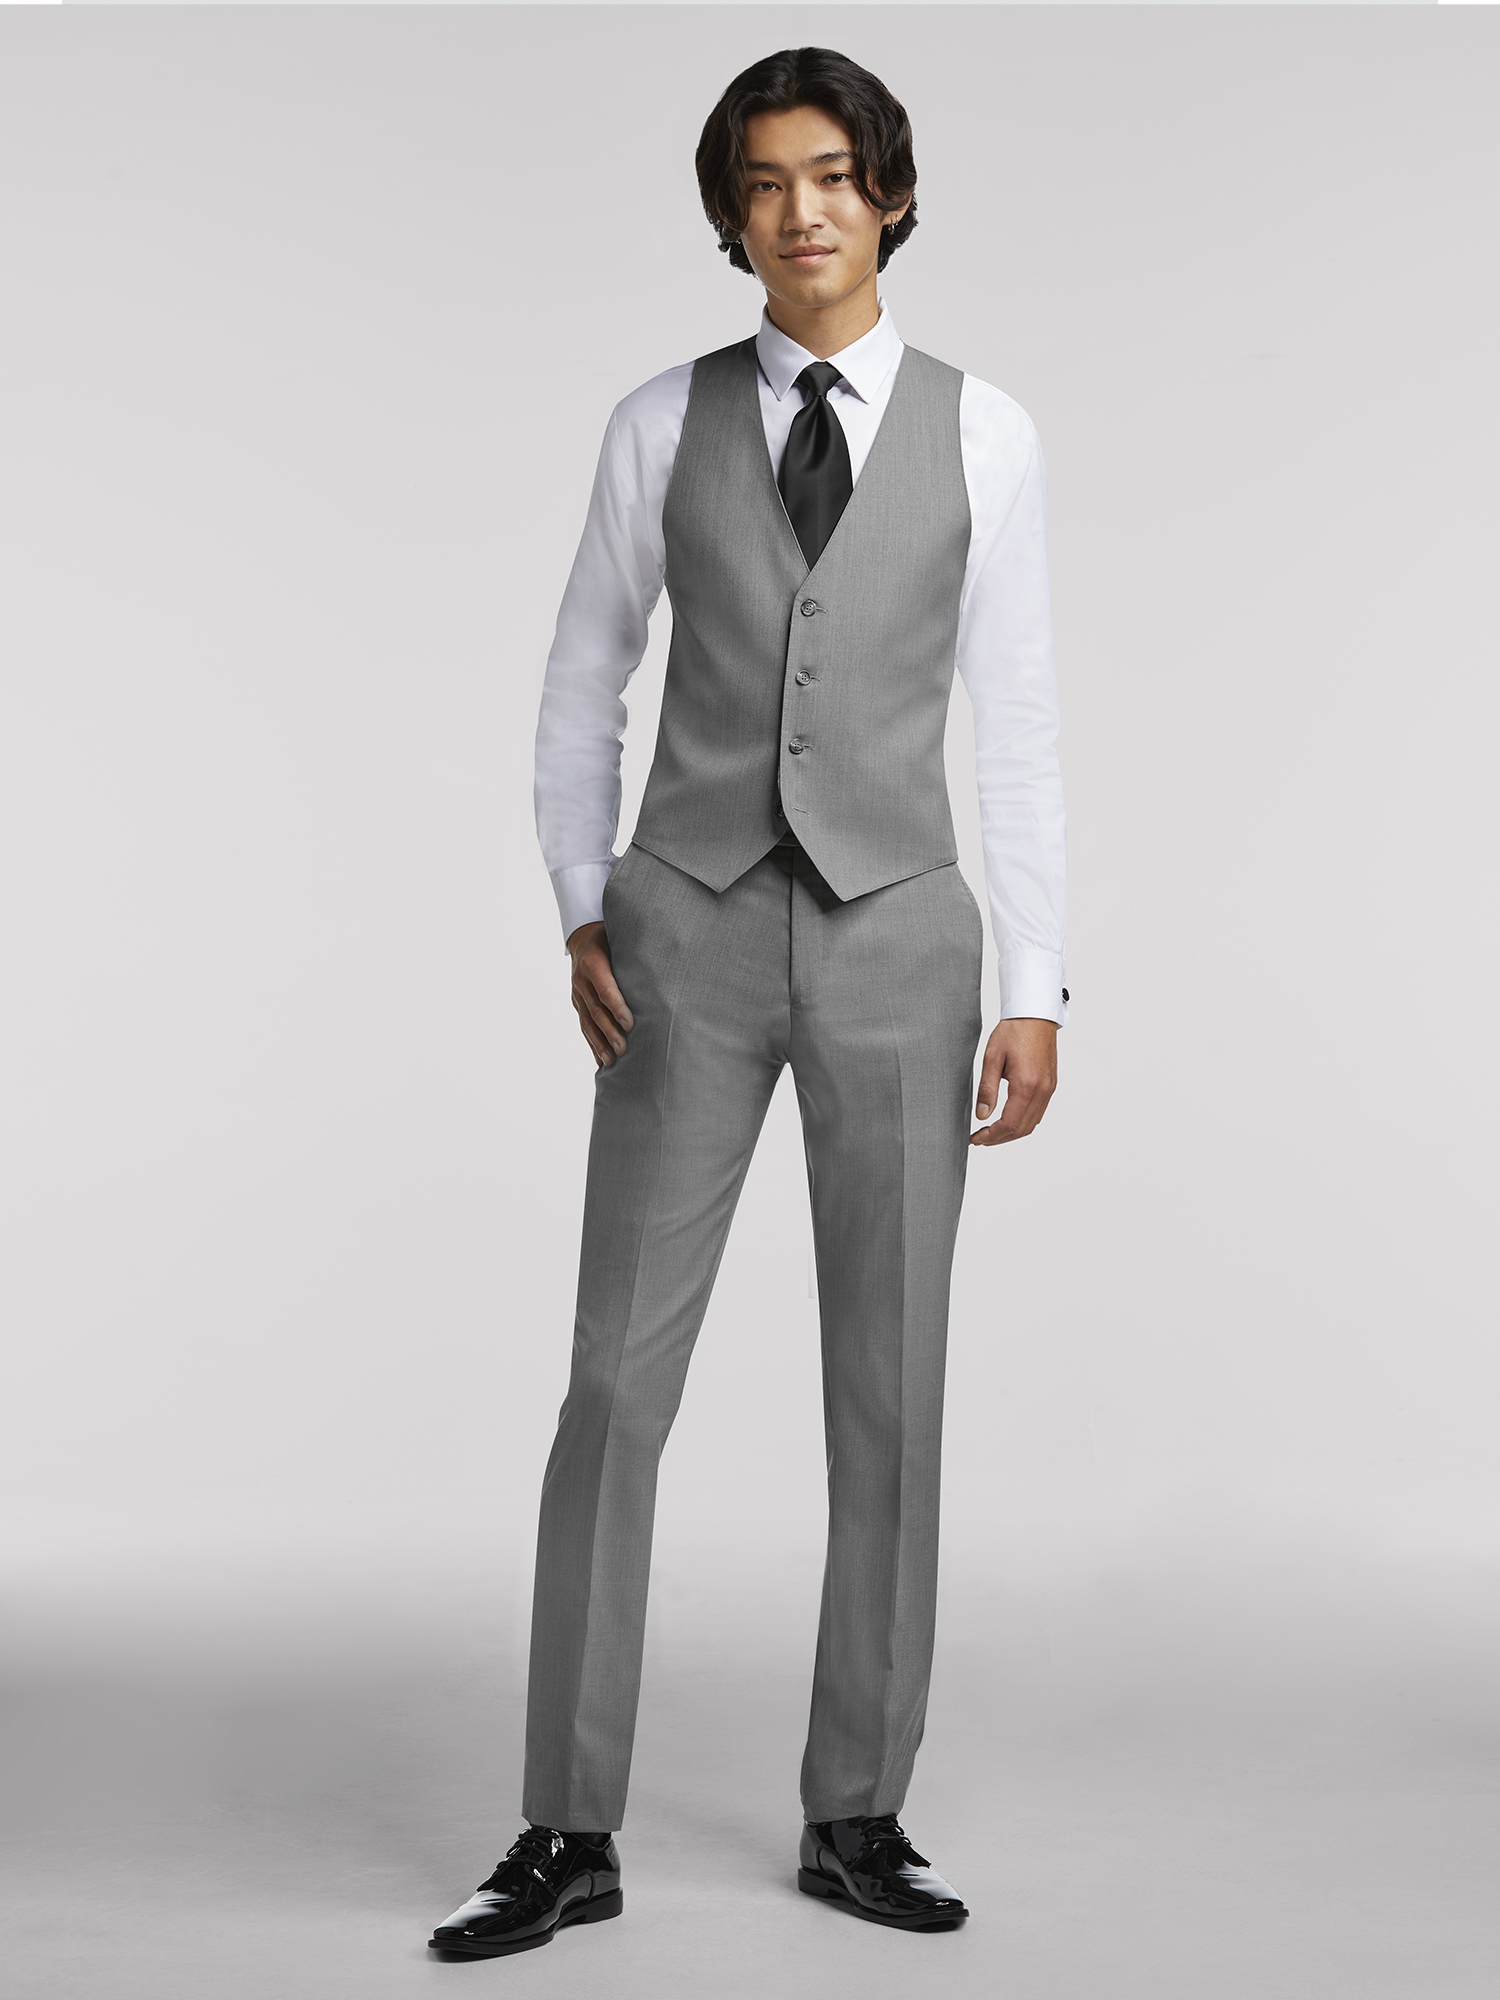 Vintage Men's Gray Suit by Pronto Uomo